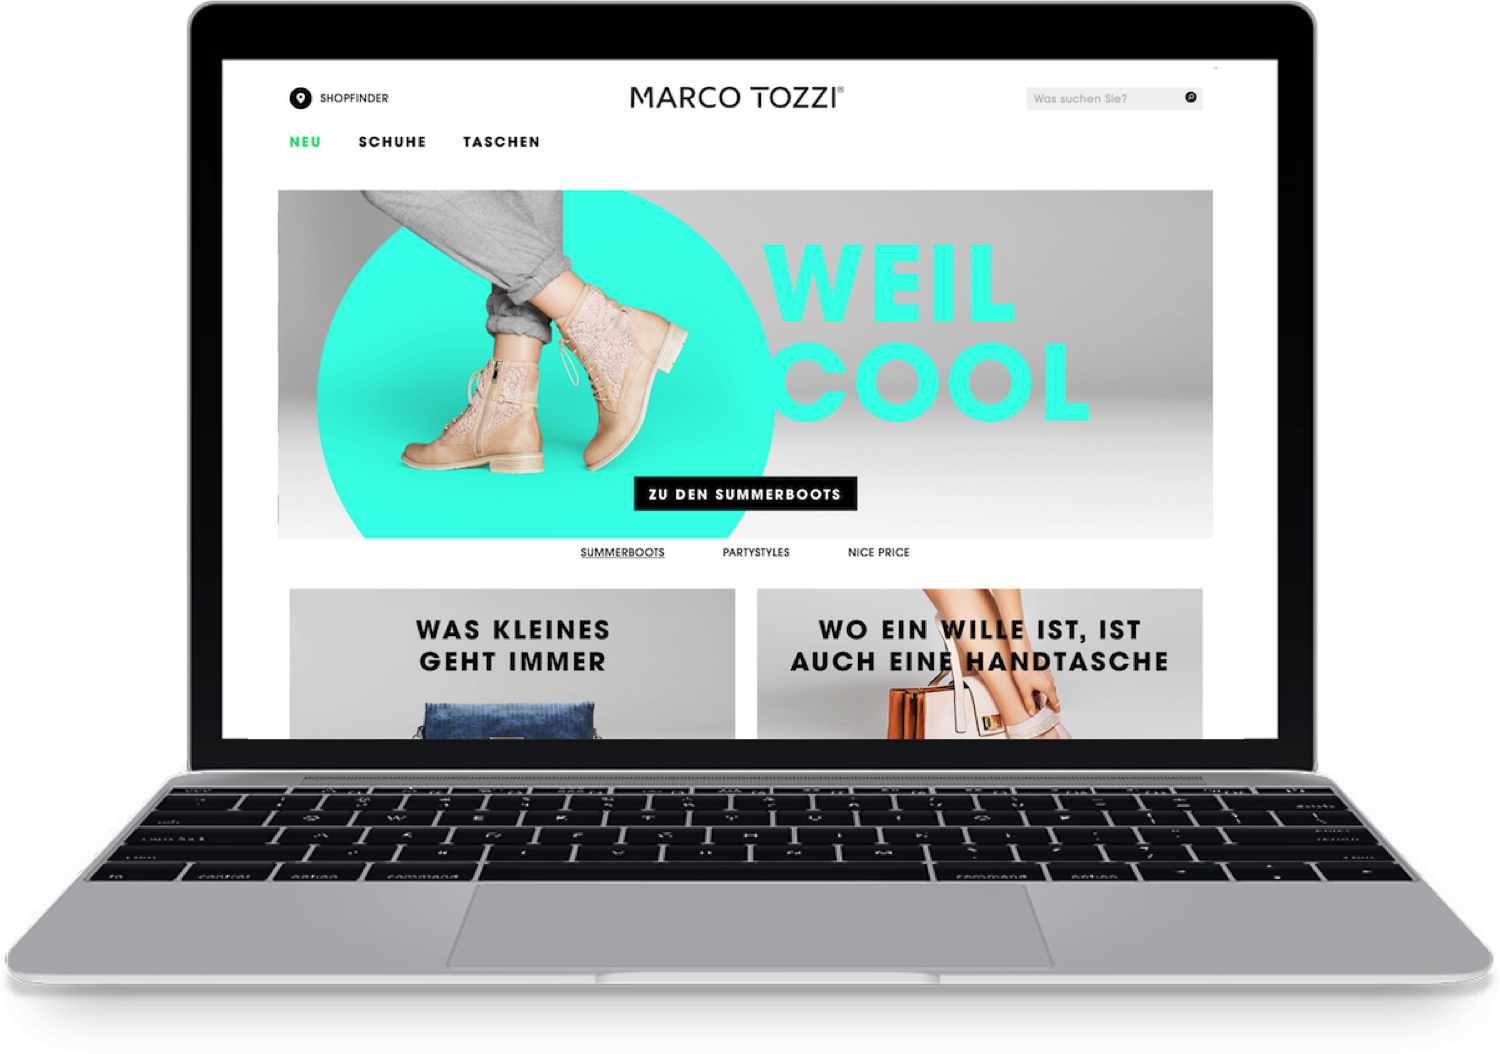 Mobizcorp realizes Wortmann Group’s new brand site Marco Tozzi